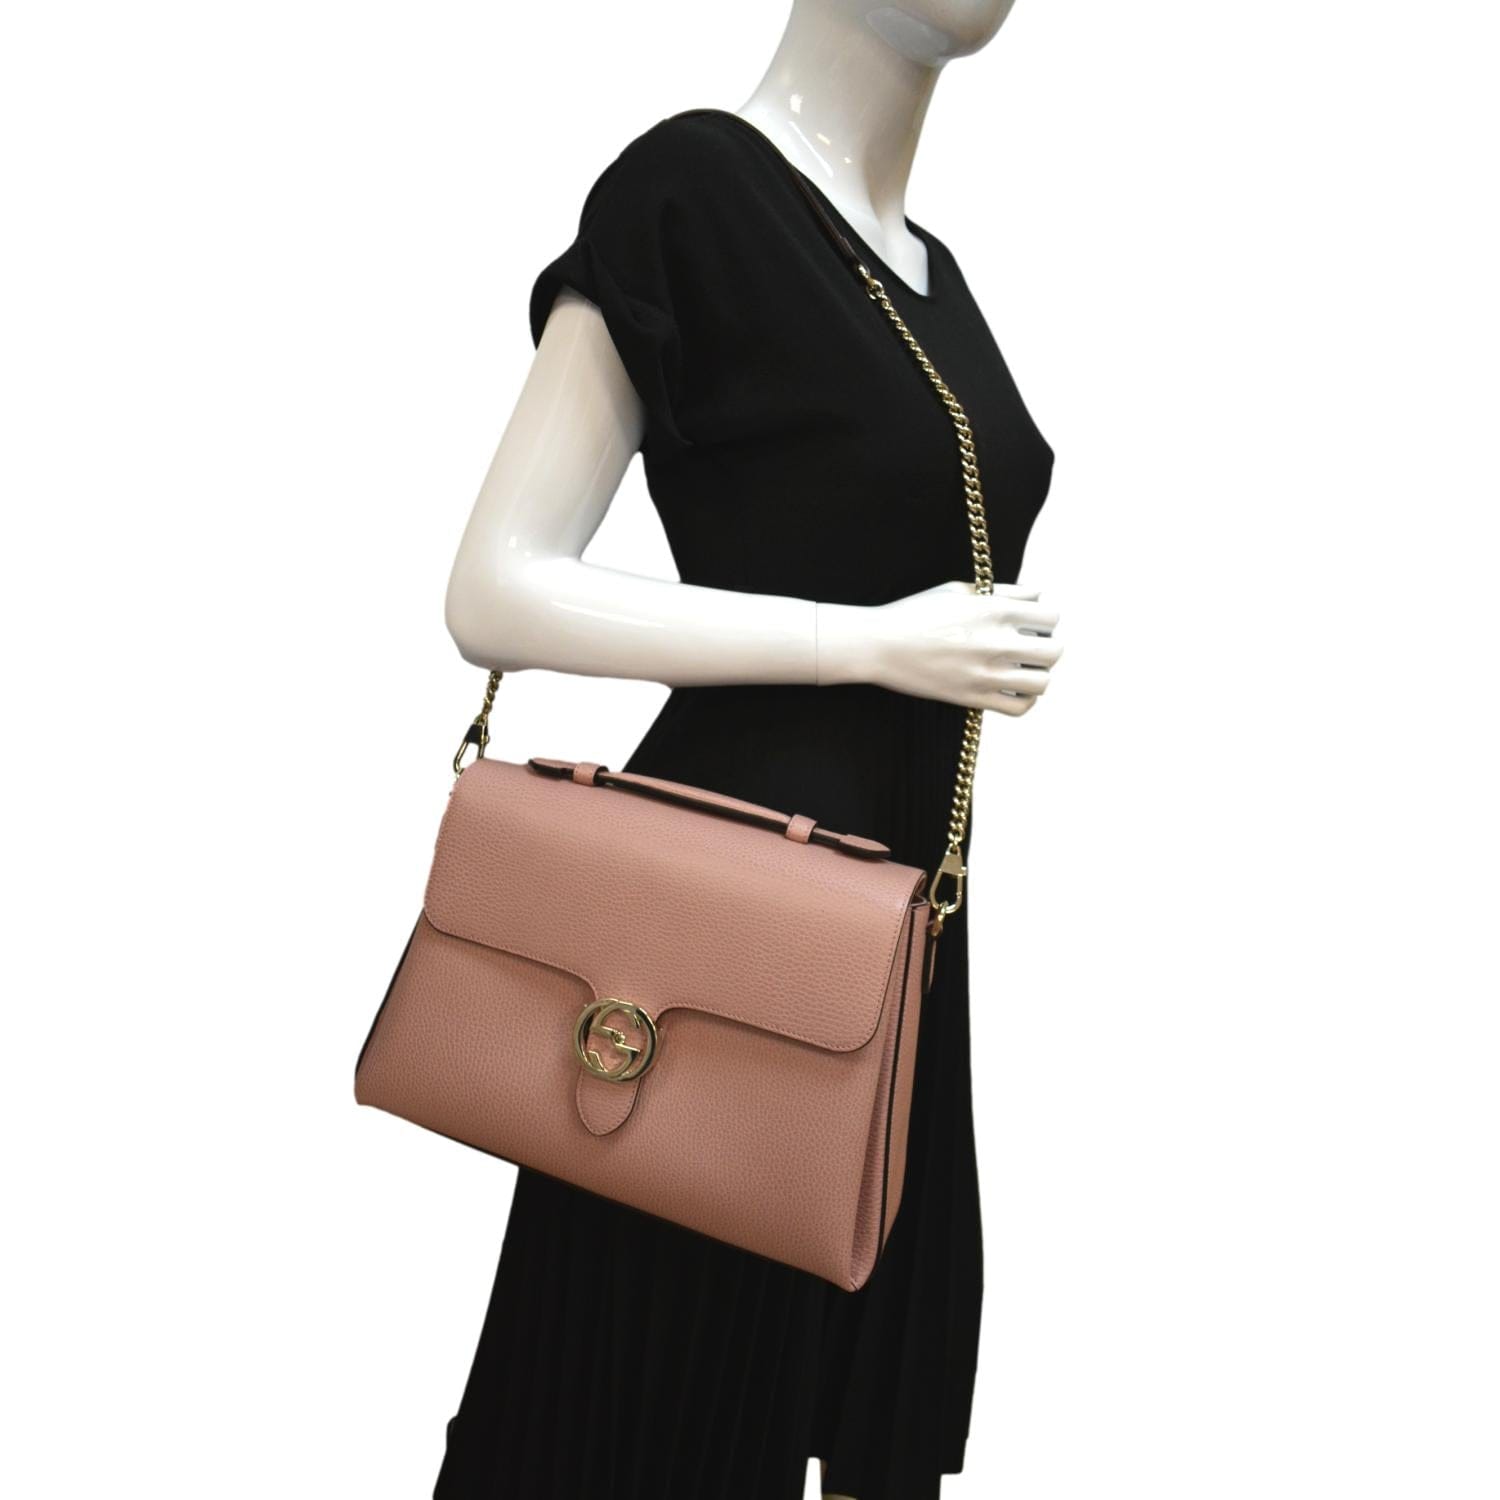 Gucci Medium Dollar Interlocking G Shoulder Bag - ShopStyle